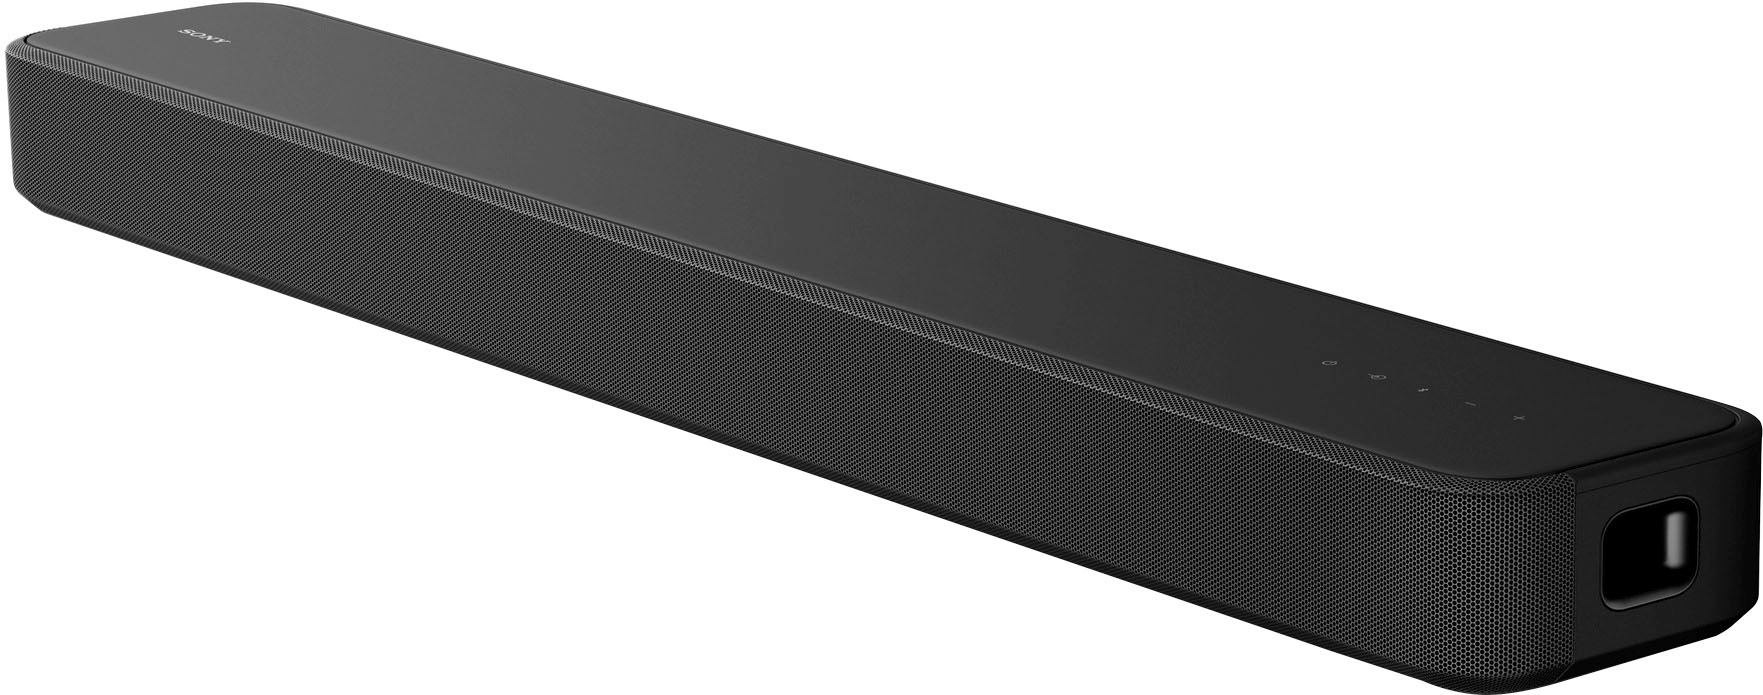 Sony HT-S2000 Soundbar Dolby HTS2000 Atmos Compact Best Buy 3.1ch - Black